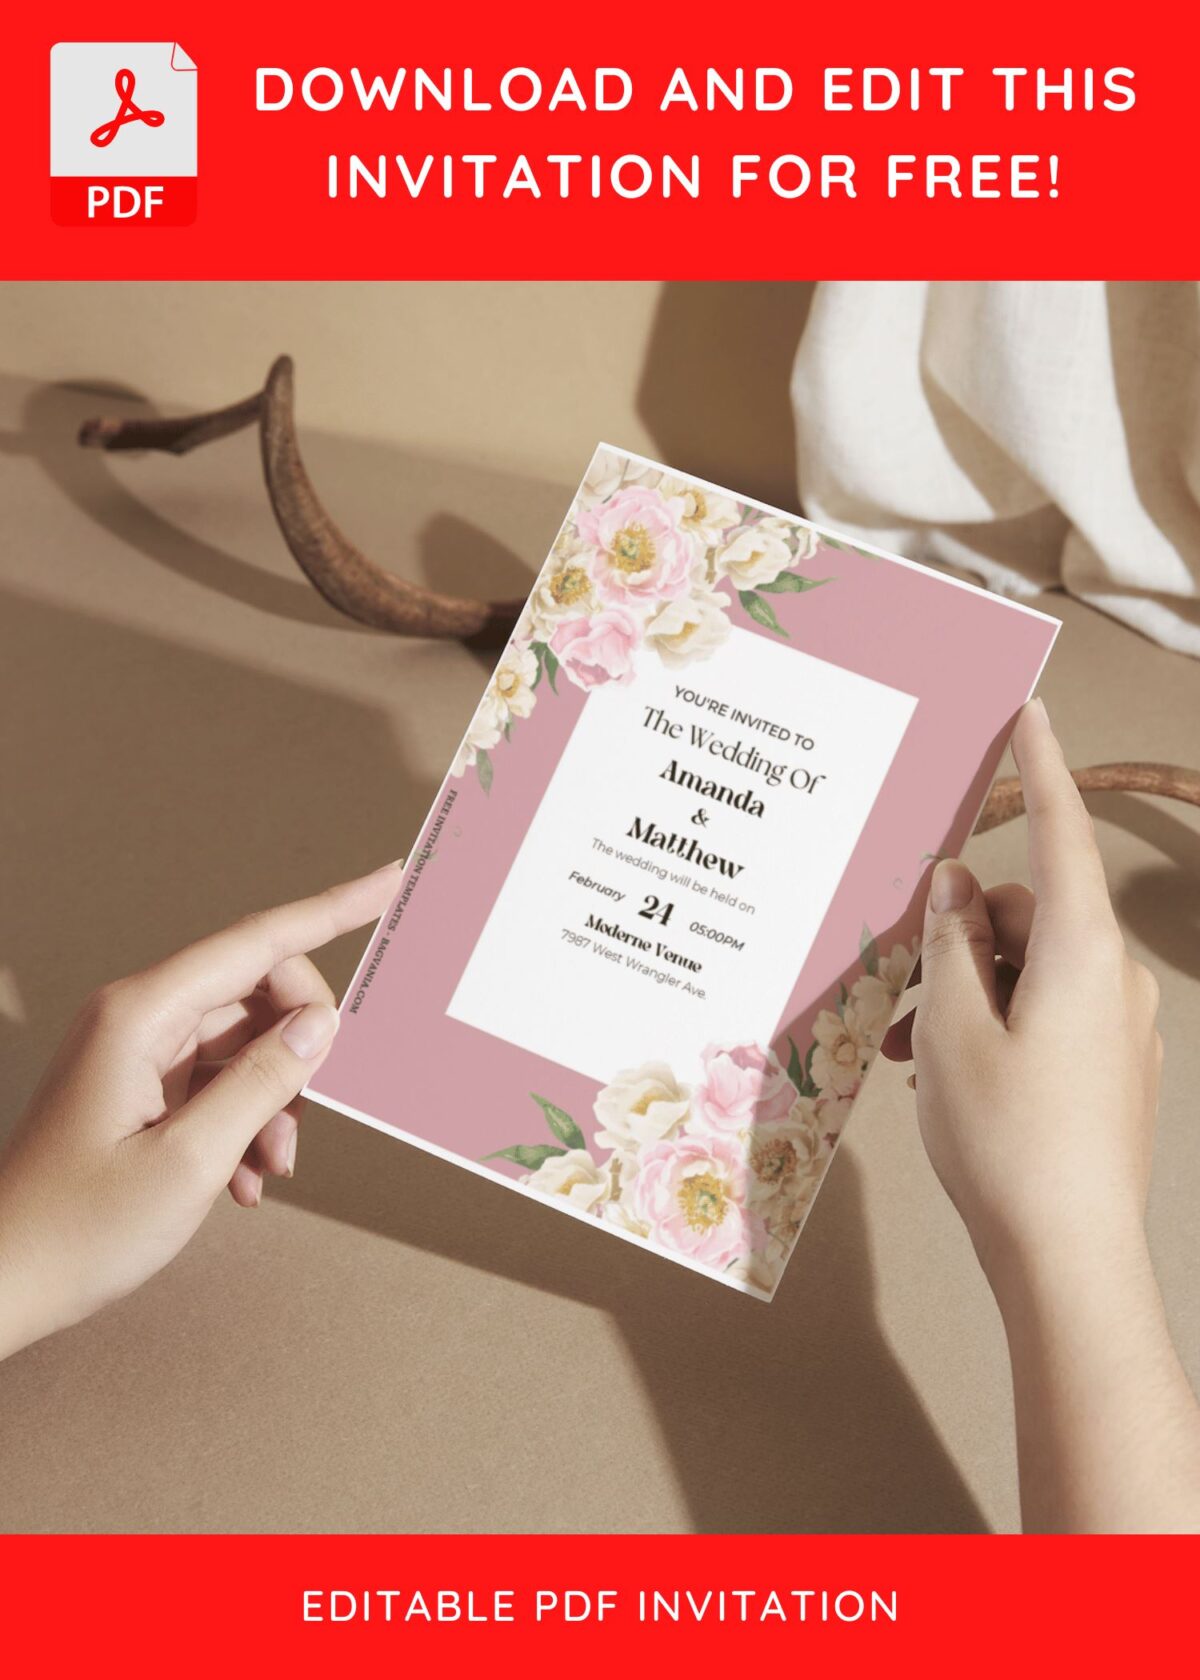 (Free Editable PDF) Pastel Floral Frame Wedding Invitation Templates with editable text